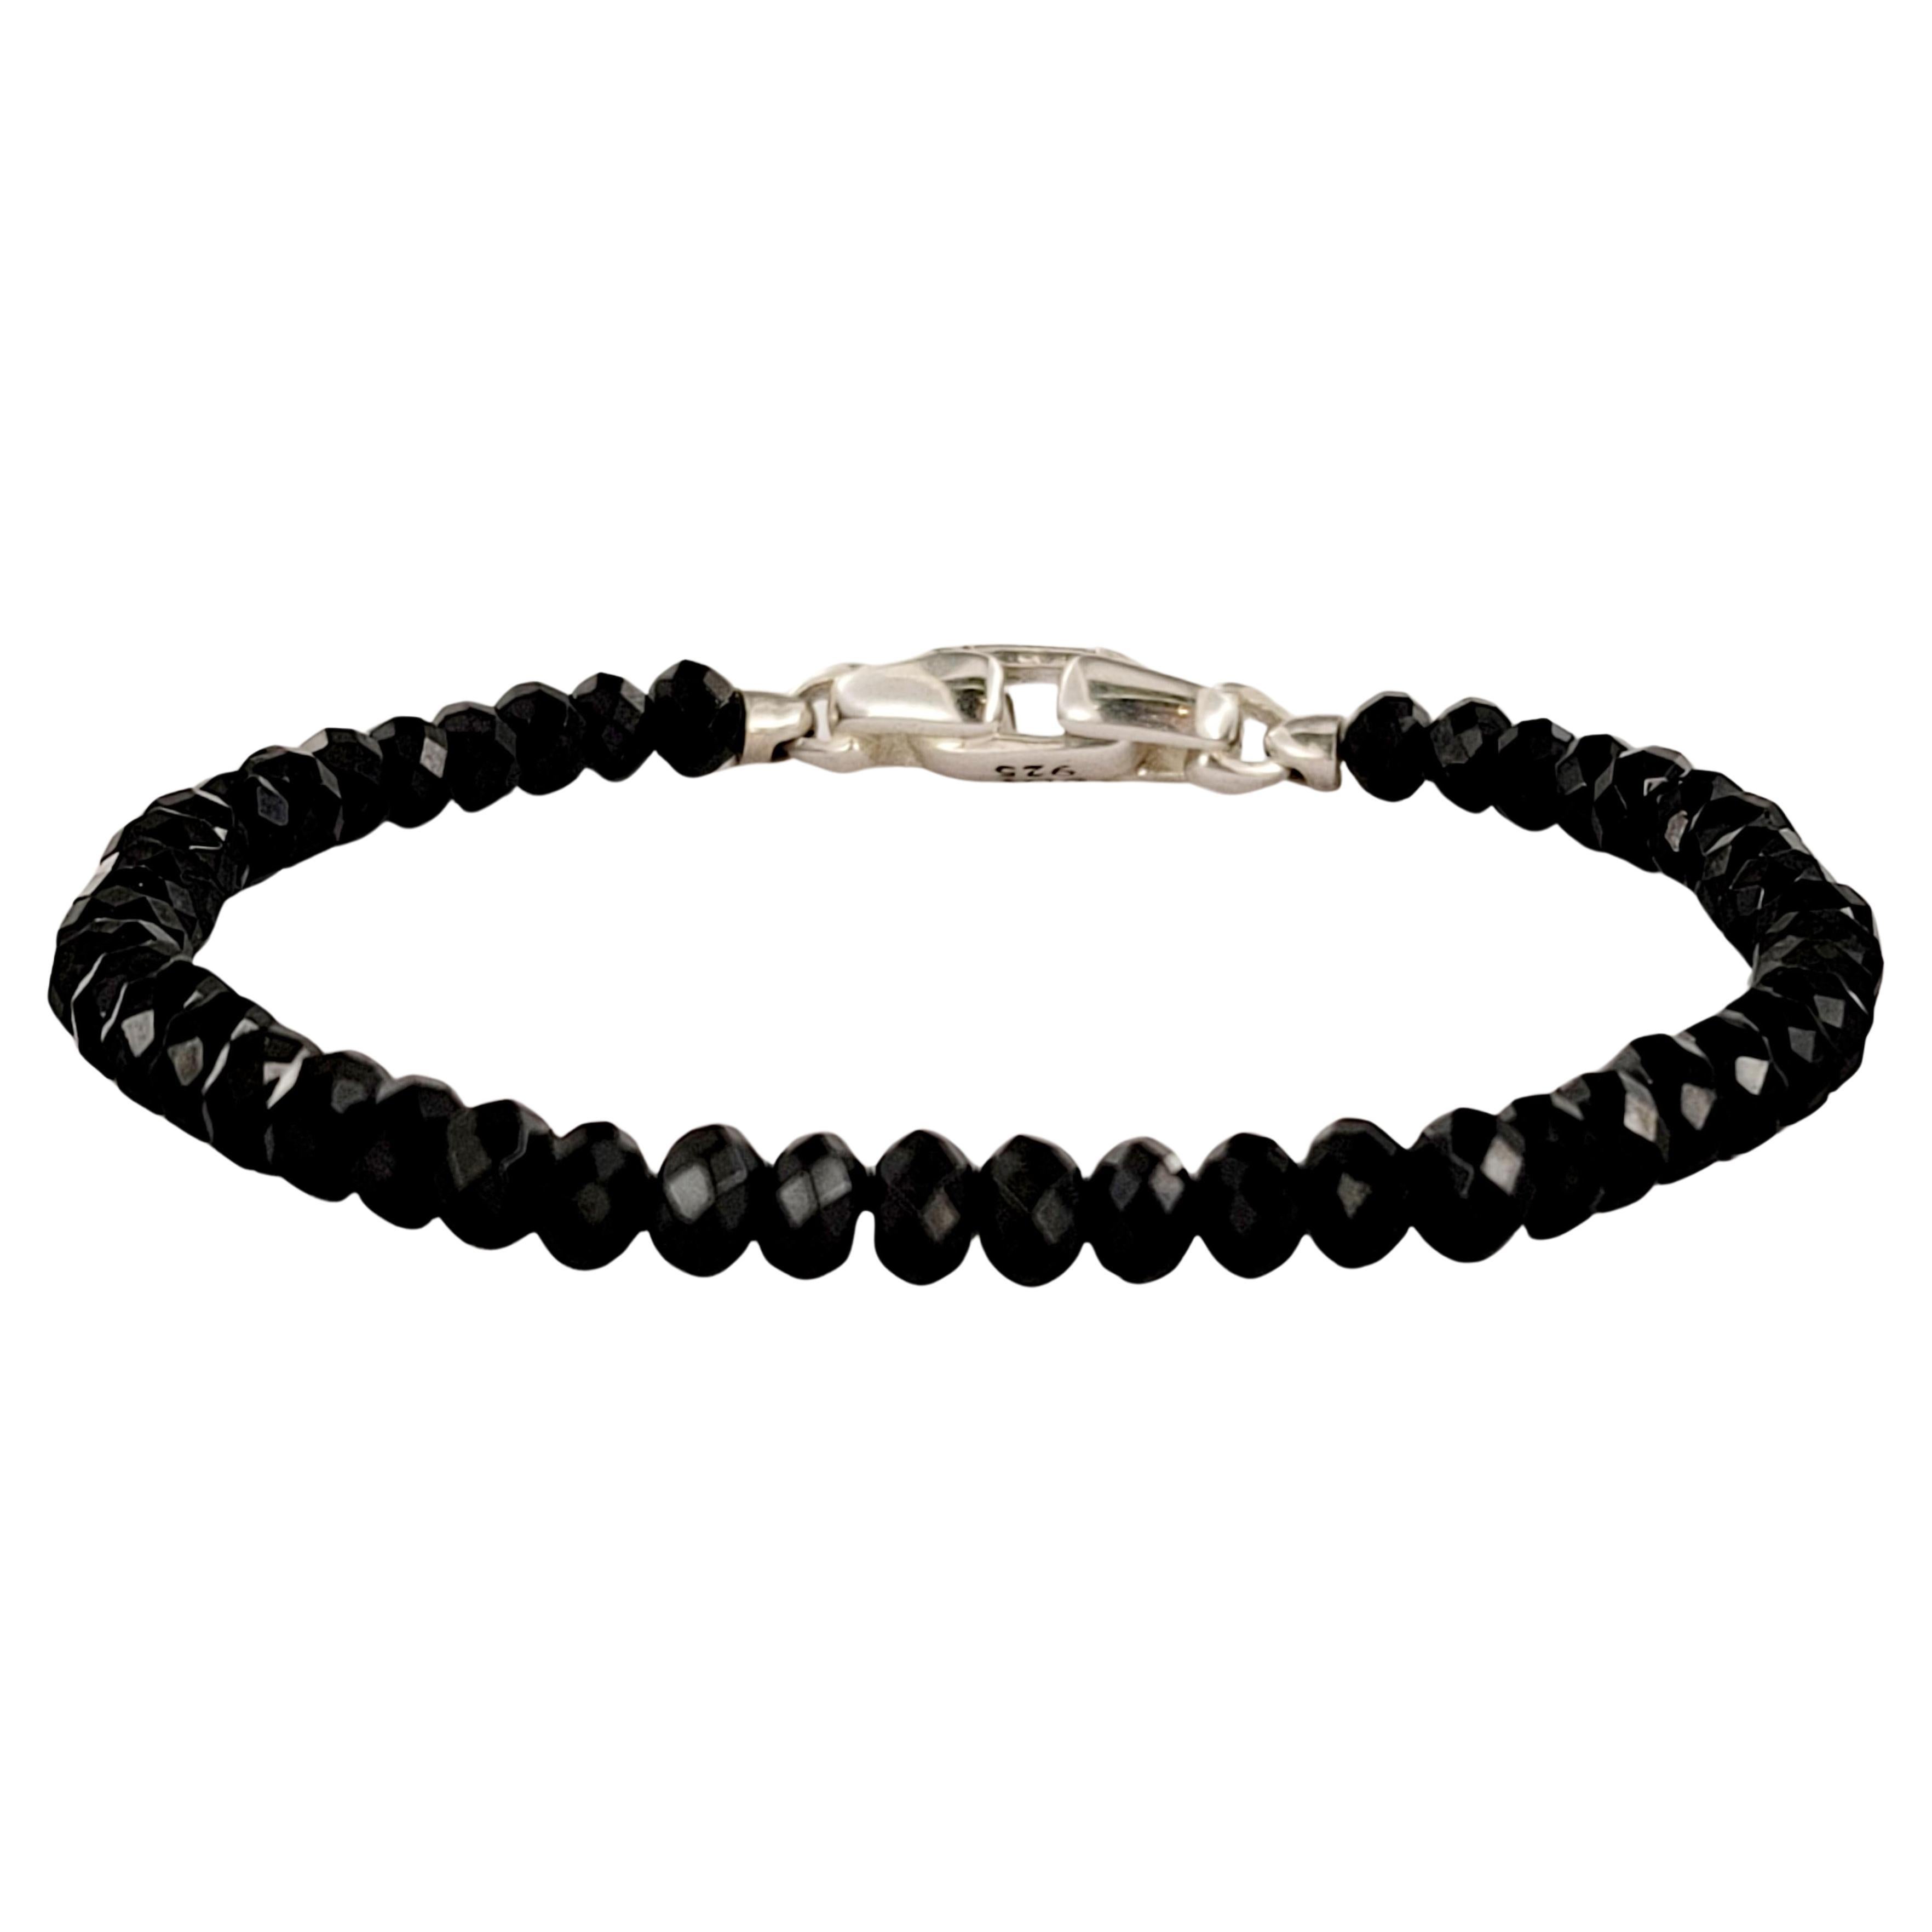 Spiritual Perlen Facettiertes Armband aus Sterlingsilber mit schwarzem Spinell, 5 mm